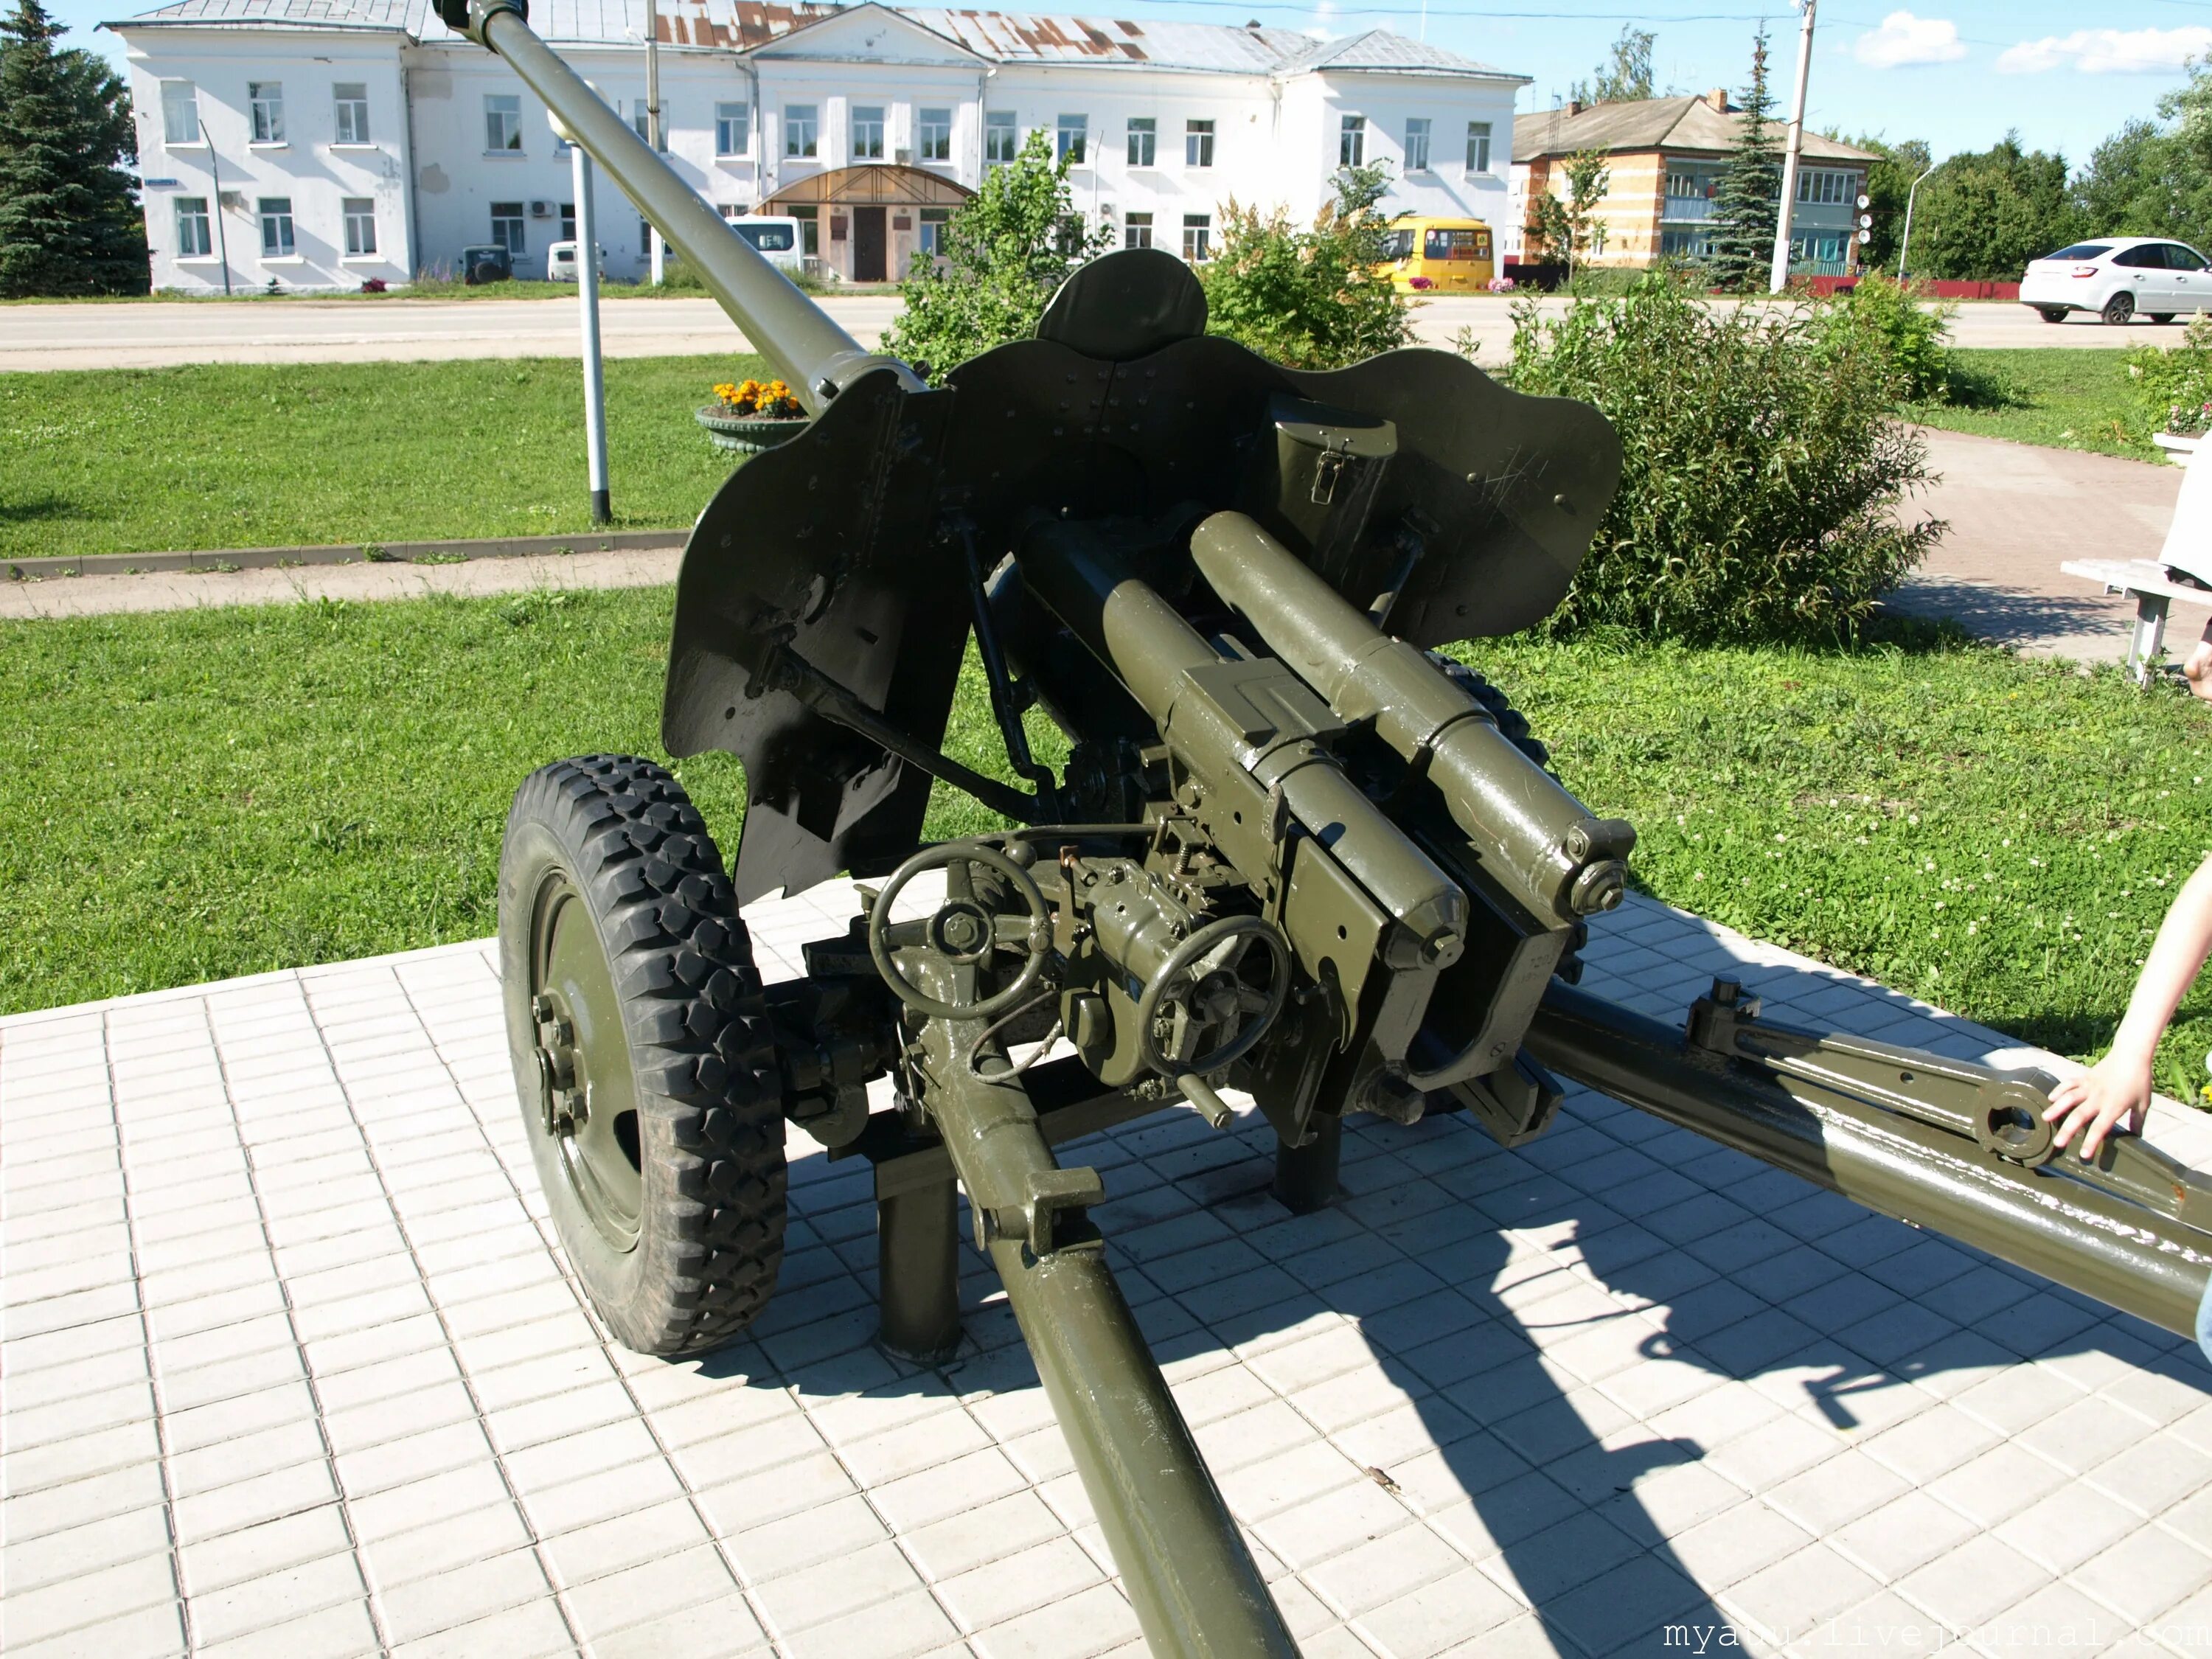 85-Мм дивизионная пушка д-44. 85-Мм дивизио́нная пу́шка д-44. Д-44 пушка. Артиллерийское орудие д44.